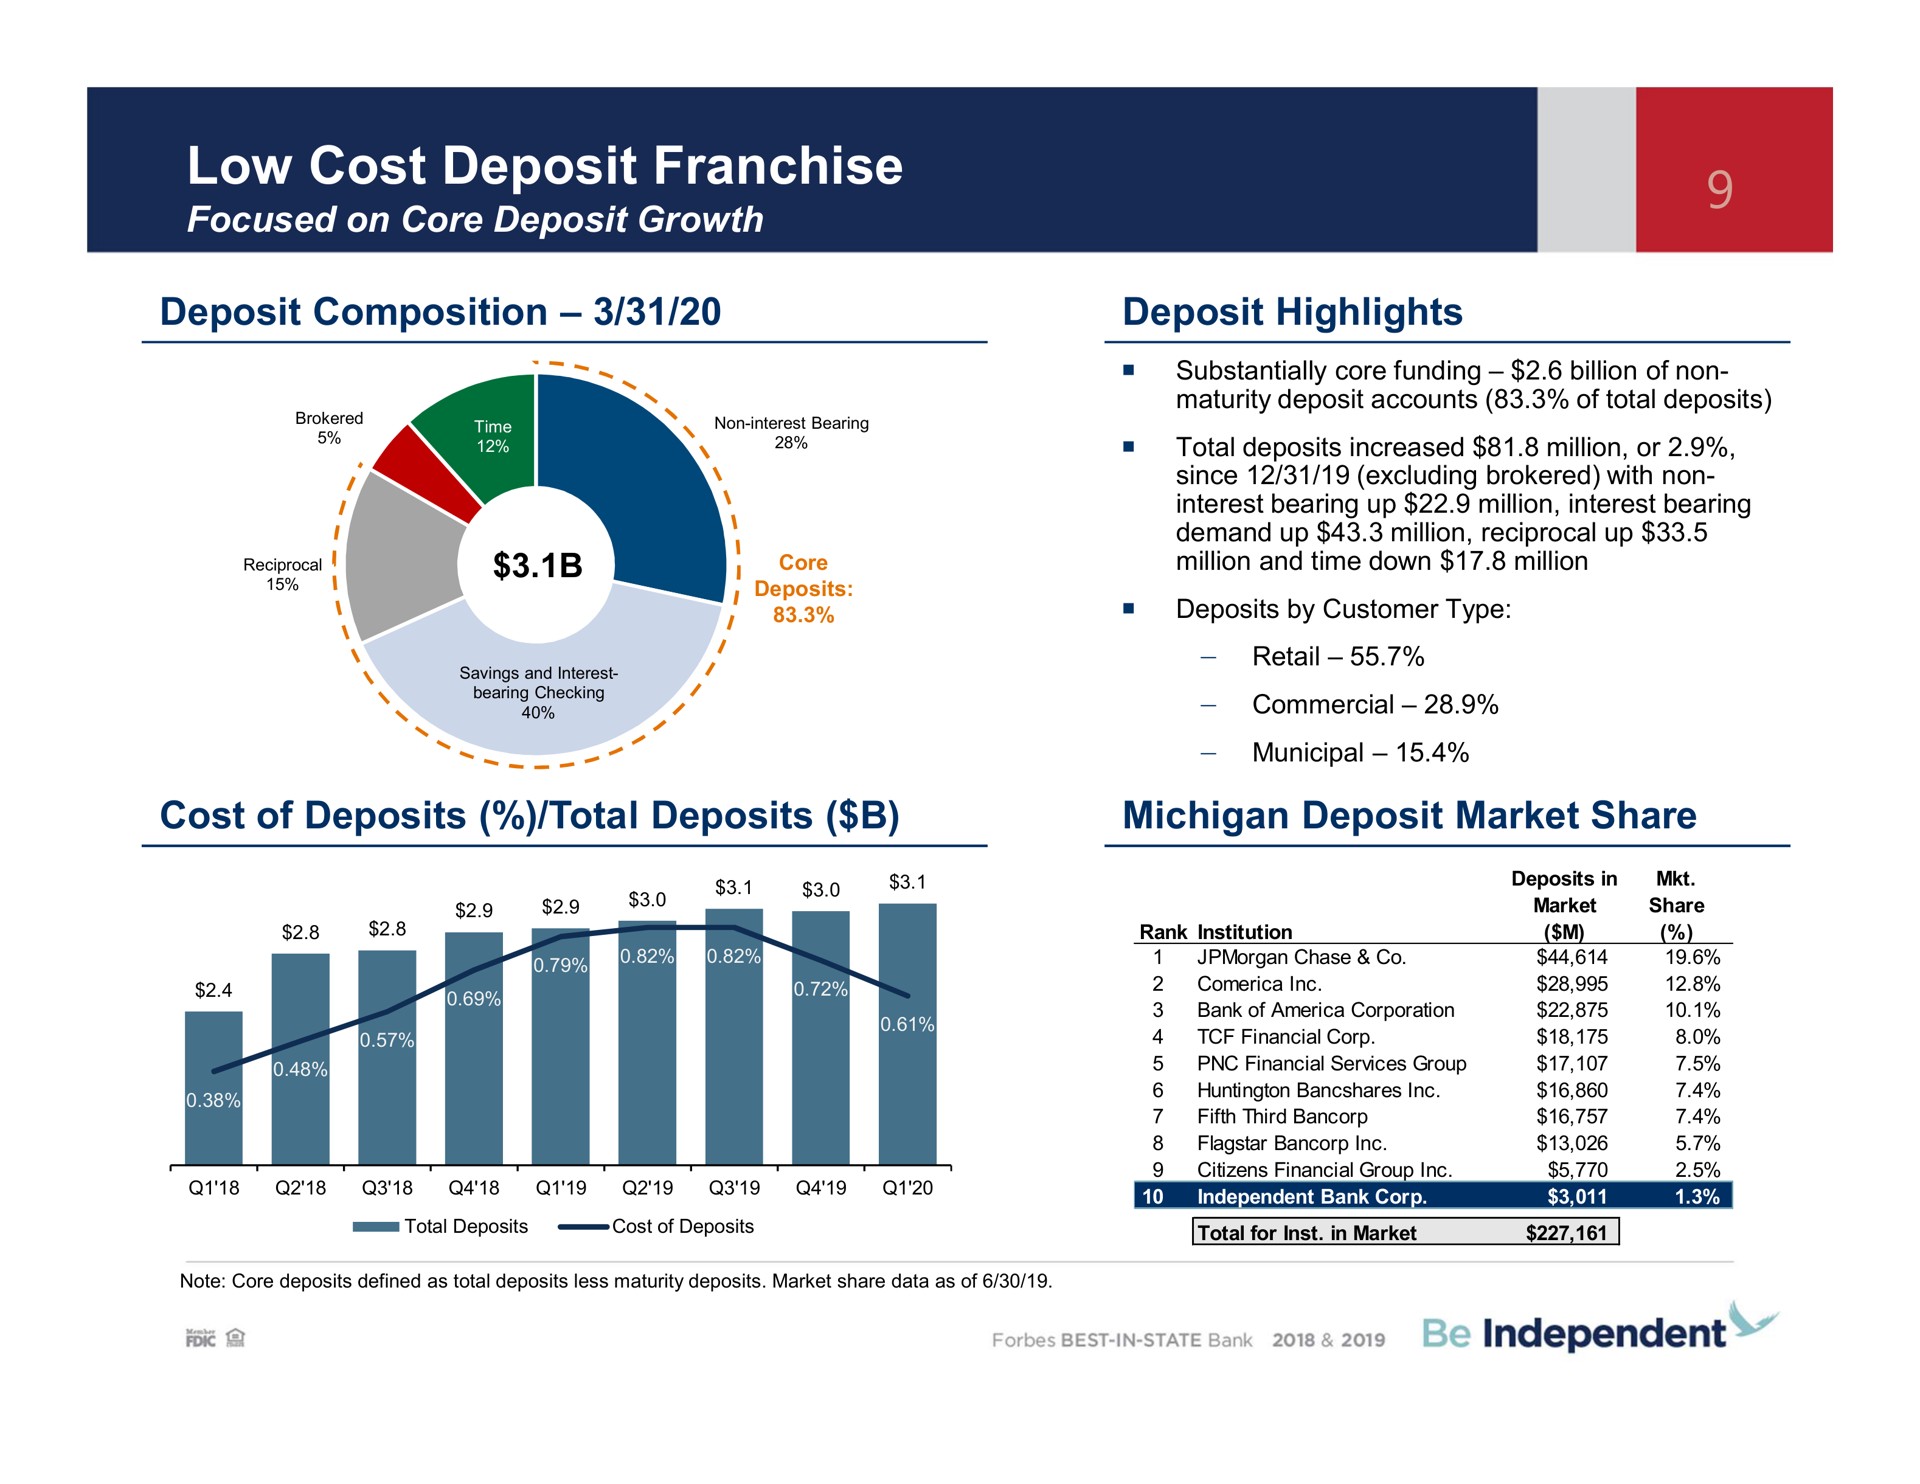 low cost deposit franchise deposit composition deposit highlights cost of deposits total deposits michigan deposit market share | Independent Bank Corp